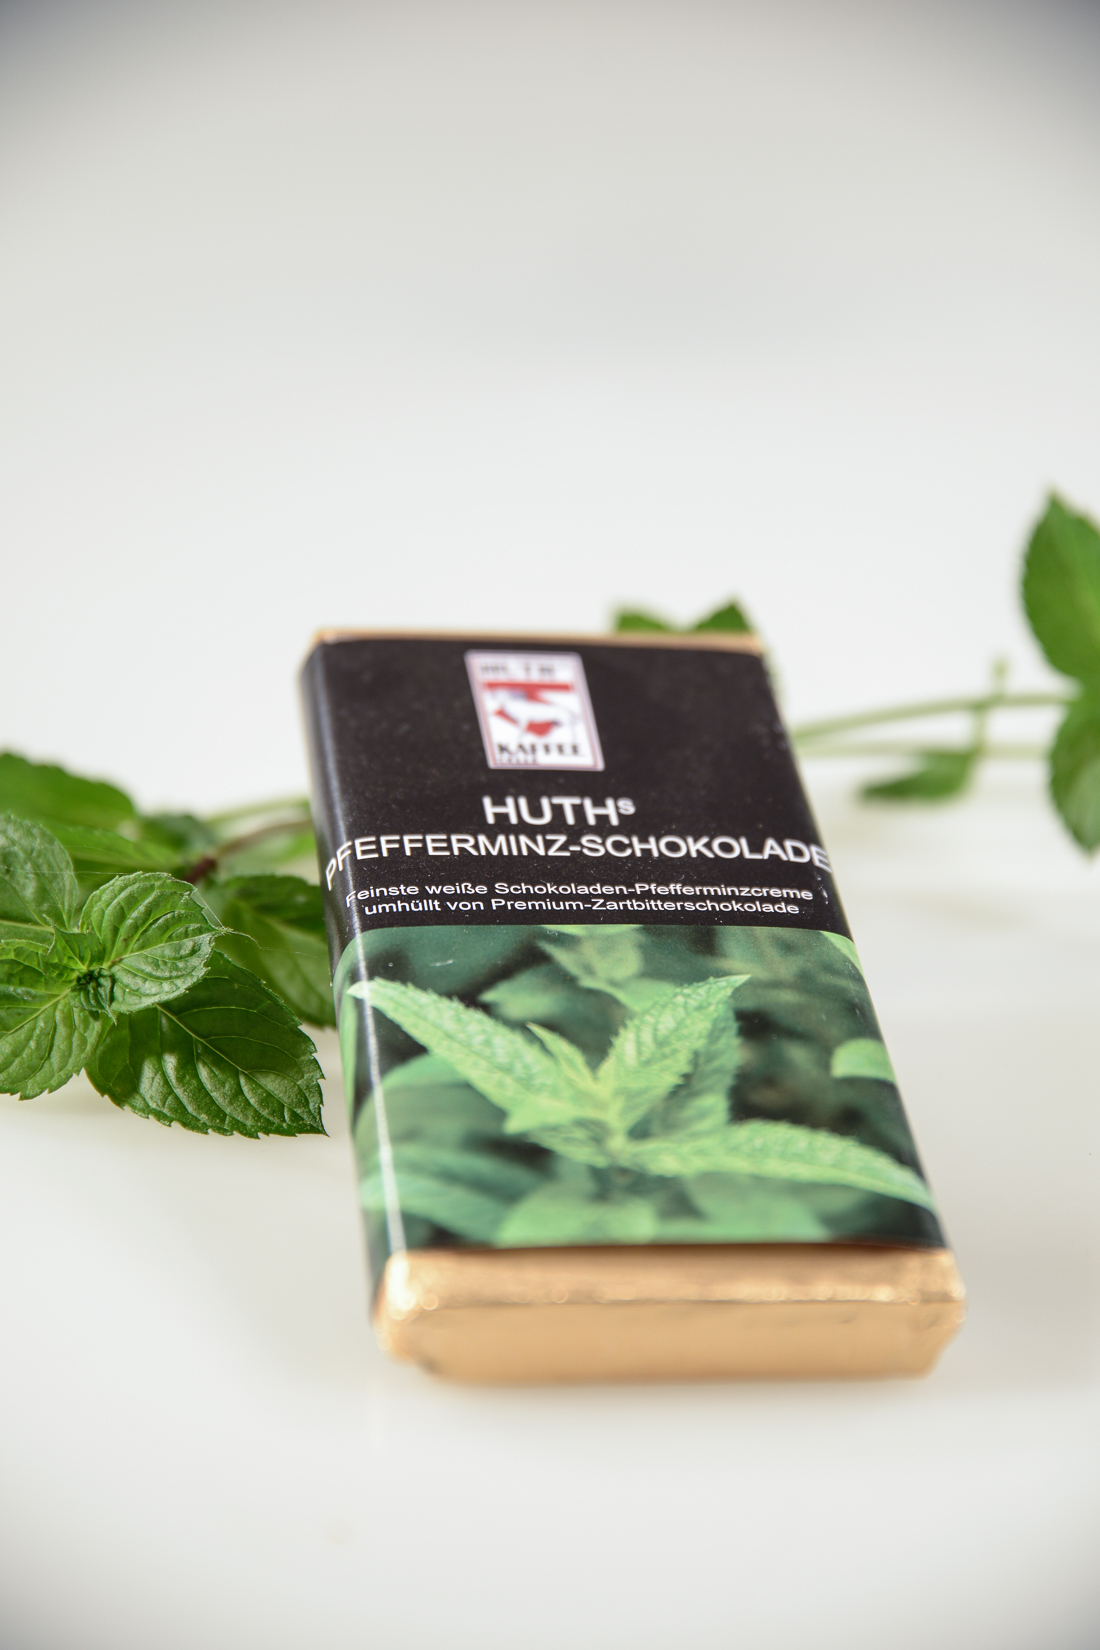 Huth's Pfefferminz-Schokolade